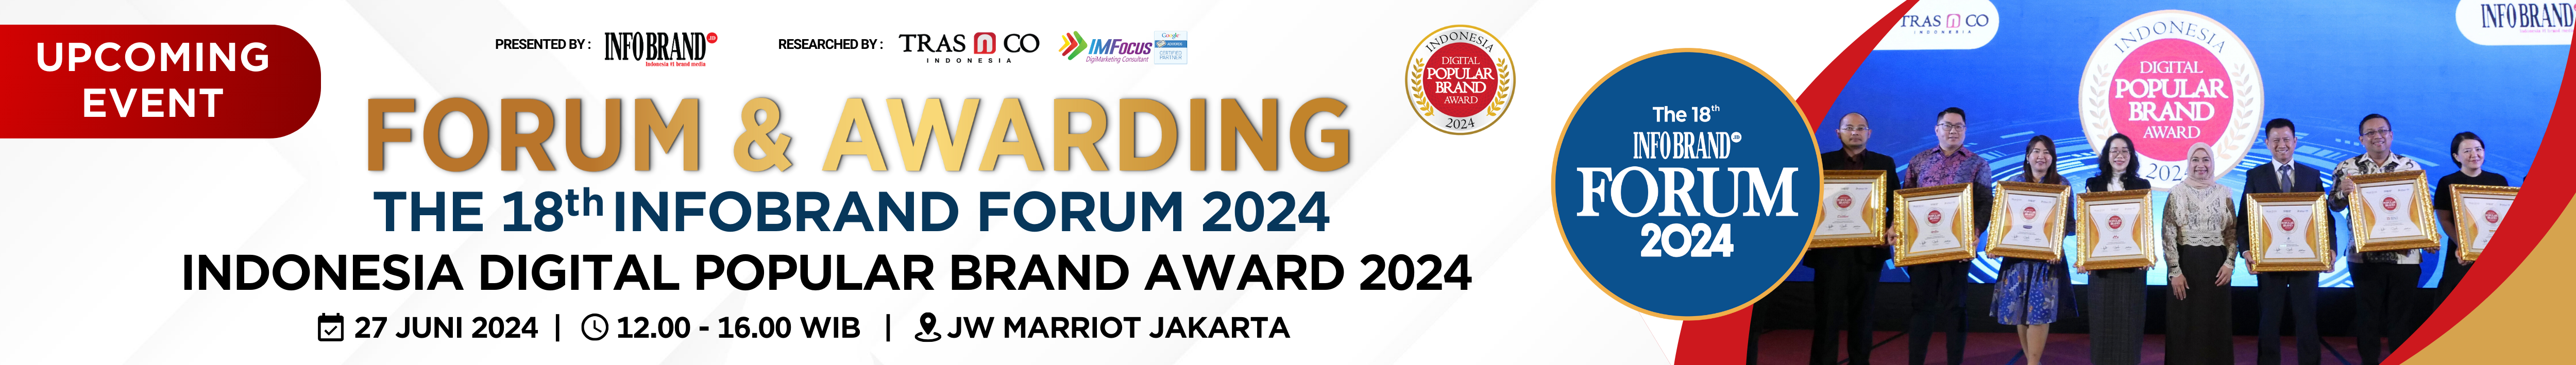 INDONESIA DIGITAL POPULAR BRAND AWARD 2024